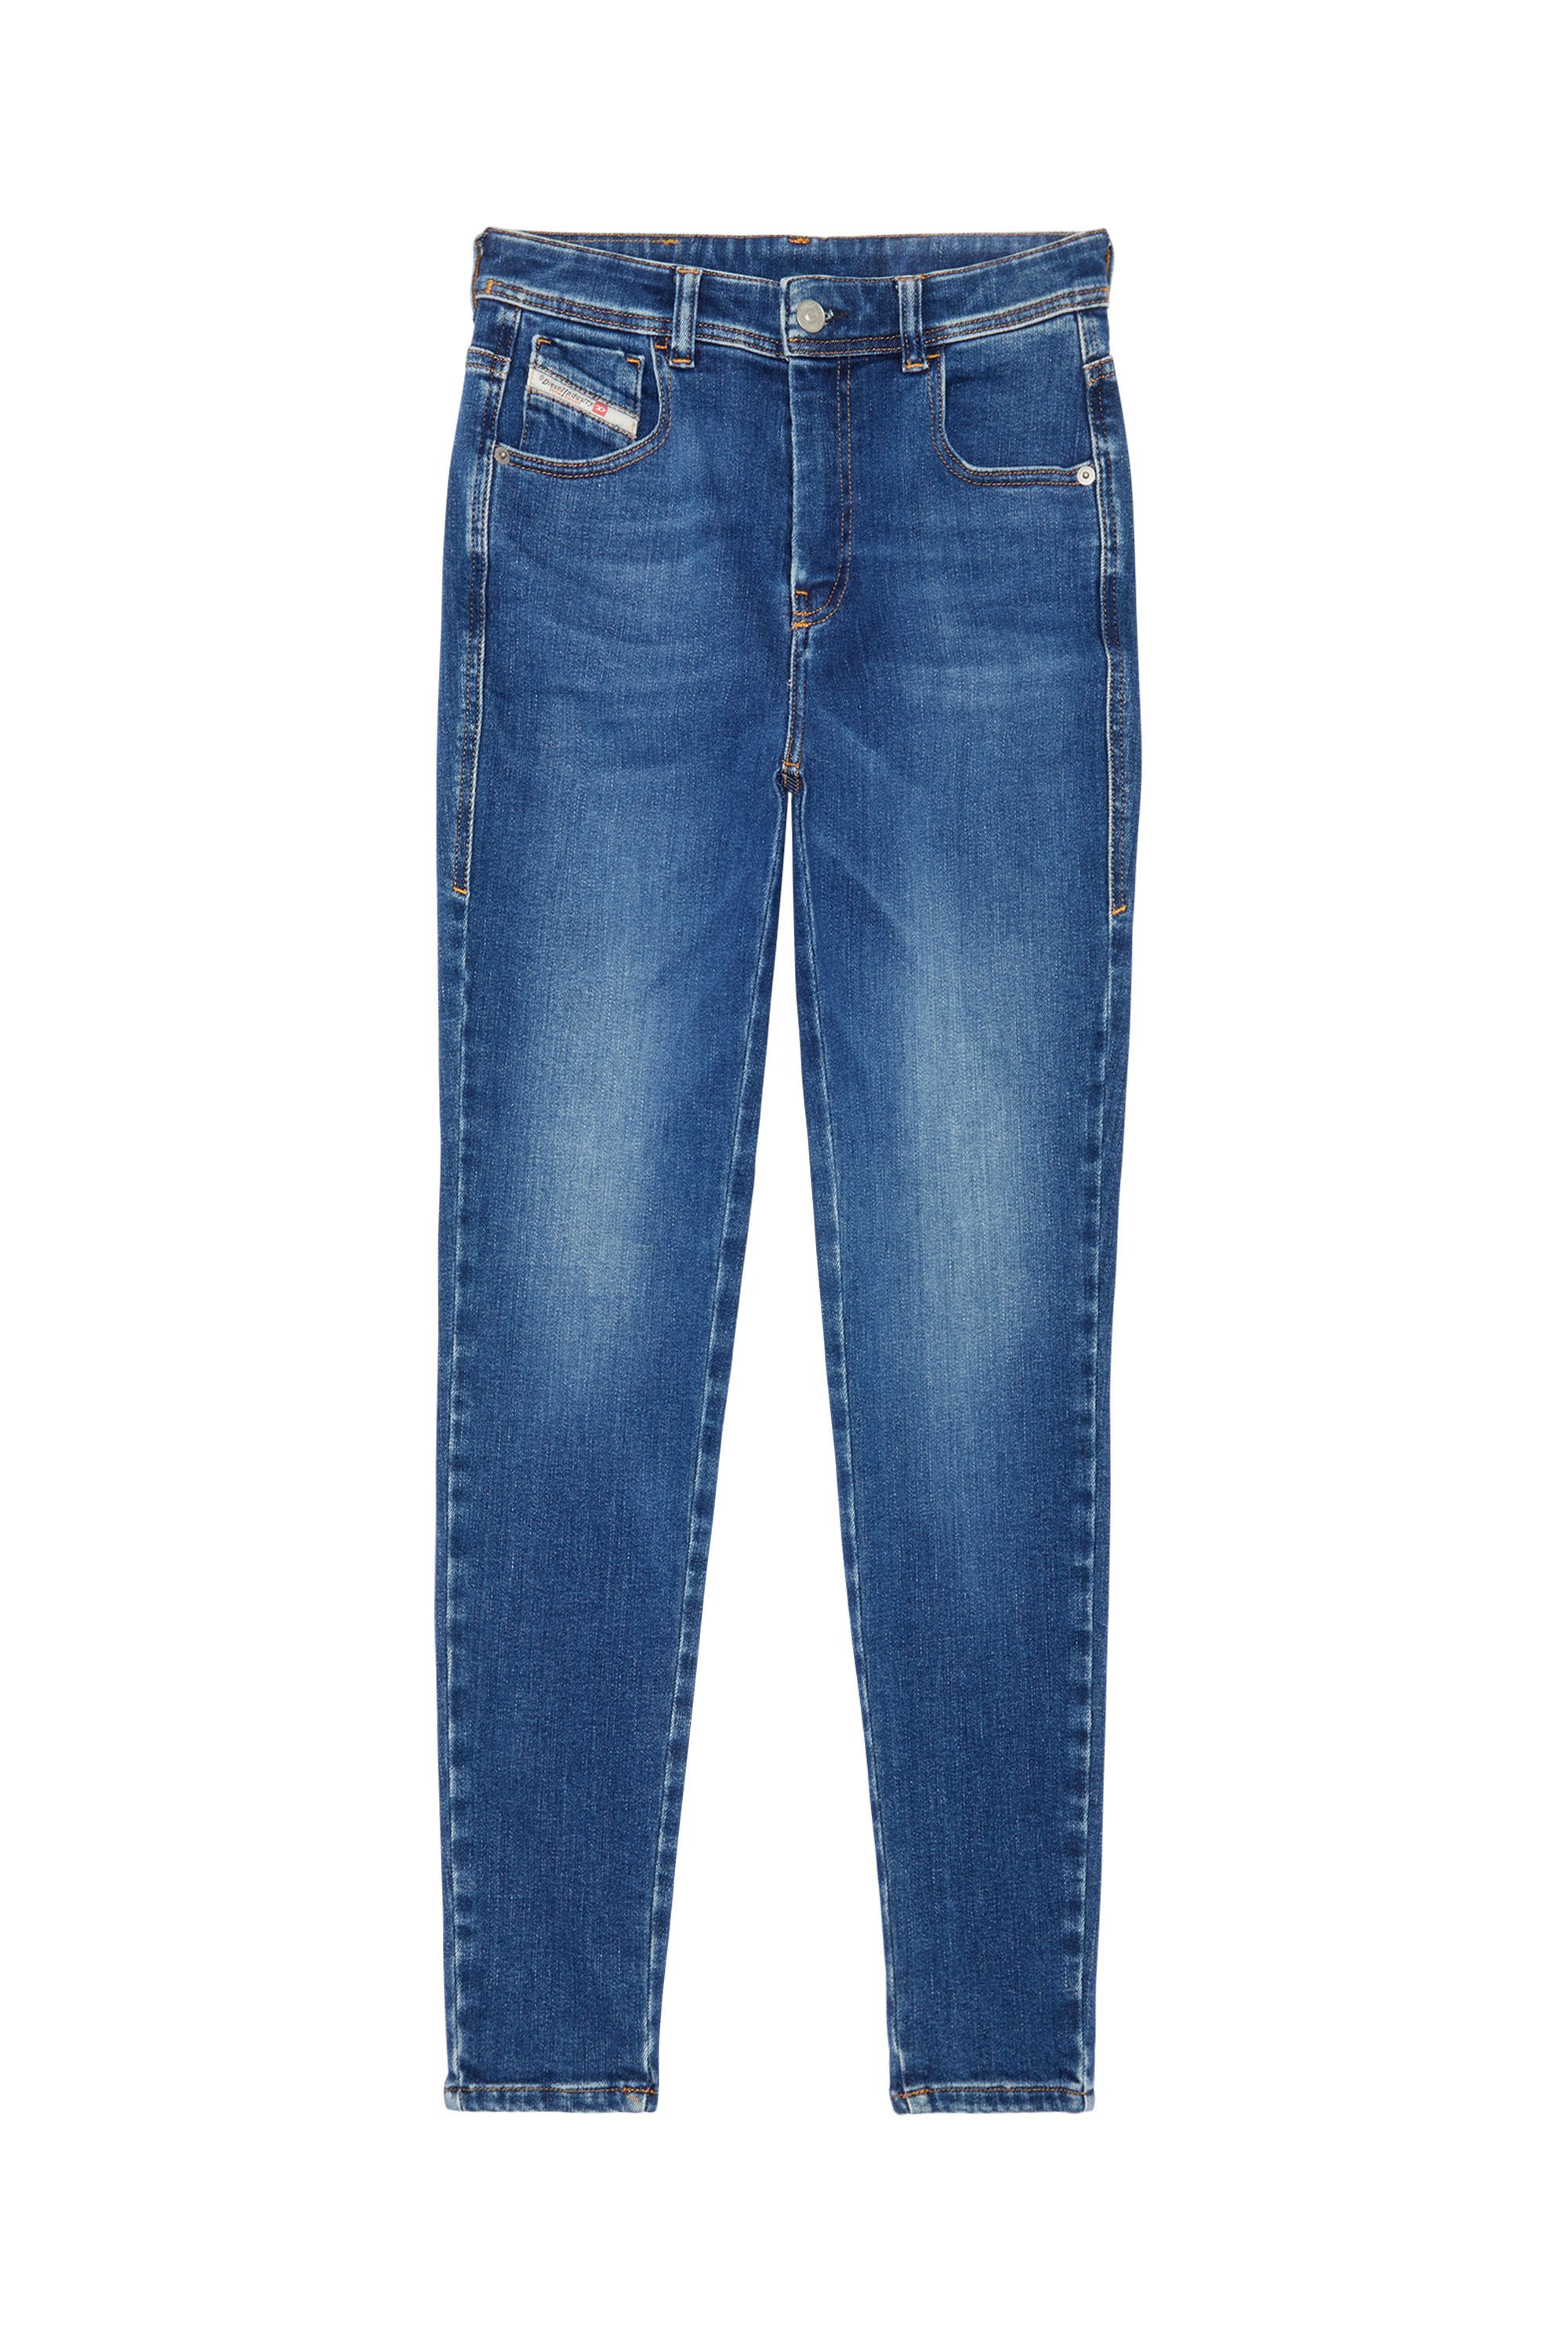 1984 Slandy high 09C21 Super skinny Jeans, Mittelblau - Jeans